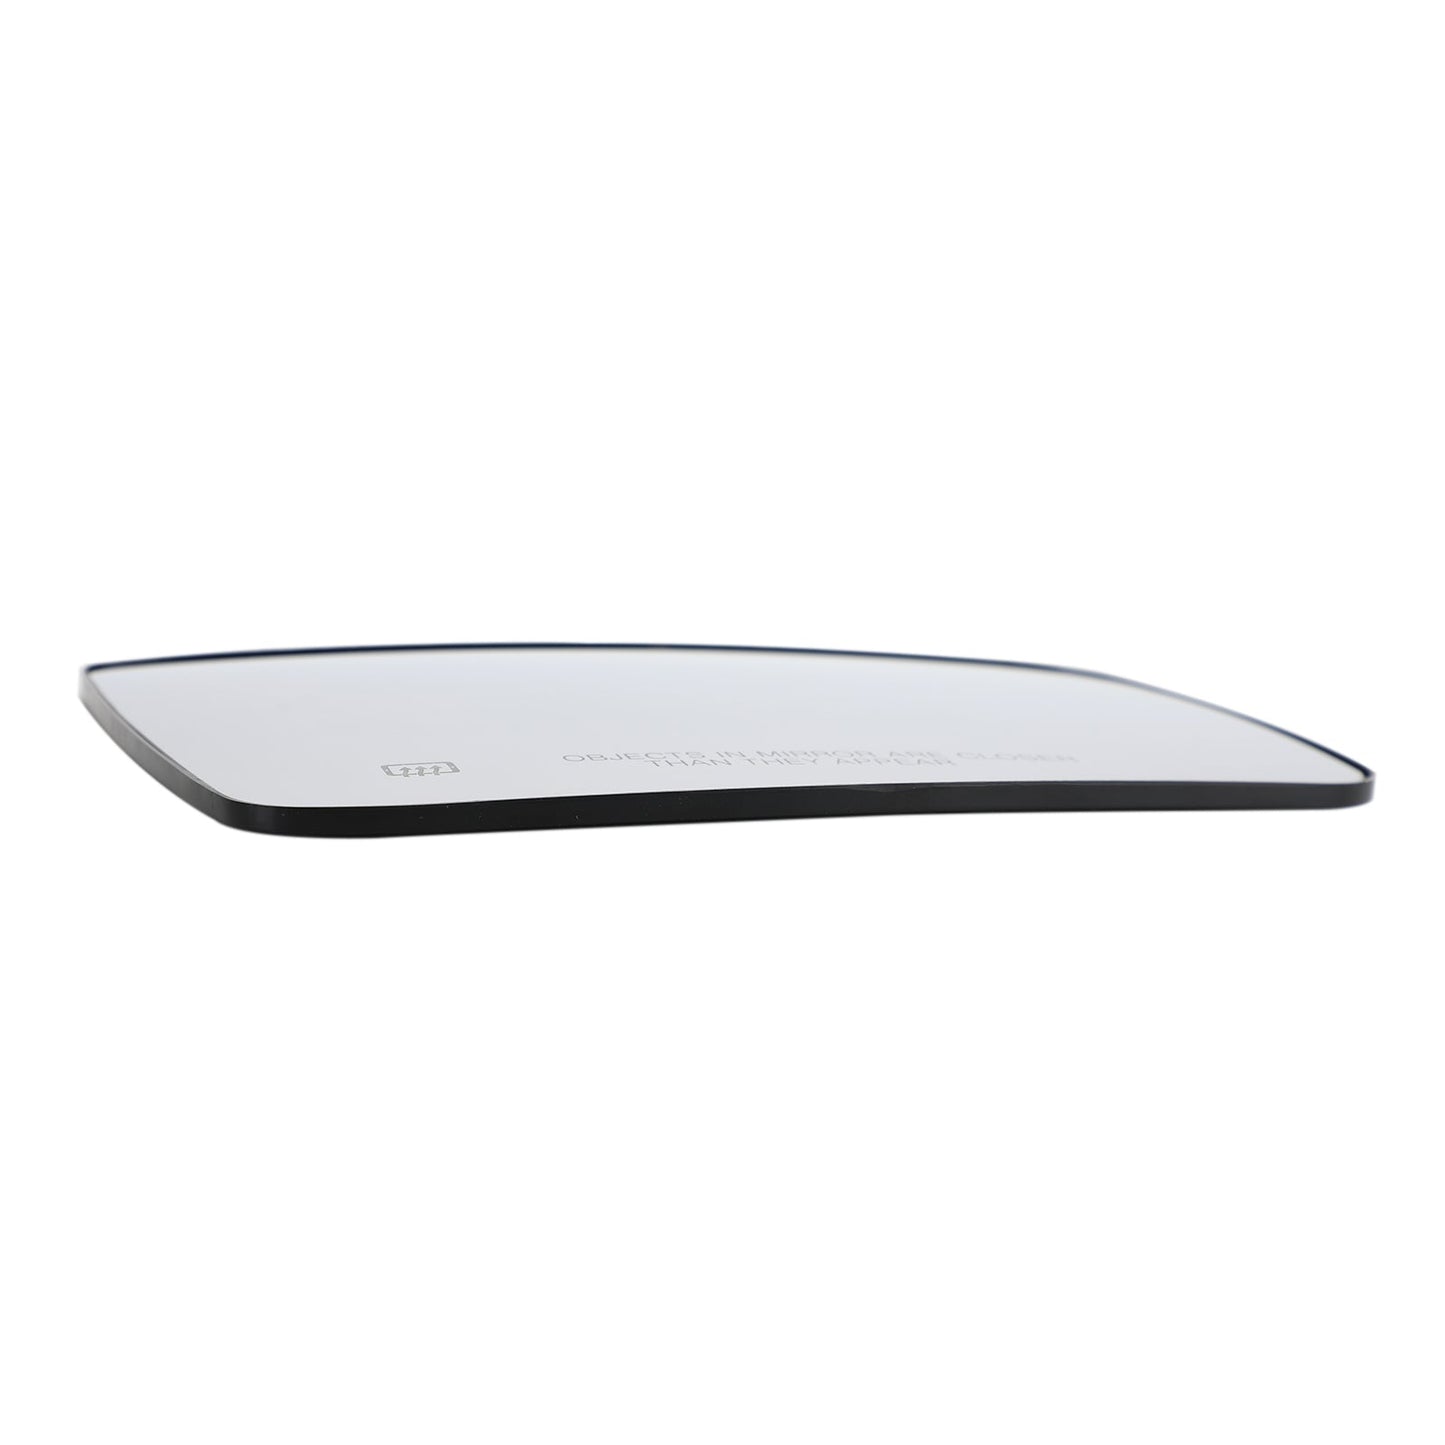 Door Side Heated Mirror Glass for Dodge Ram Set (LH + RH) 1500 2500 2009-2018